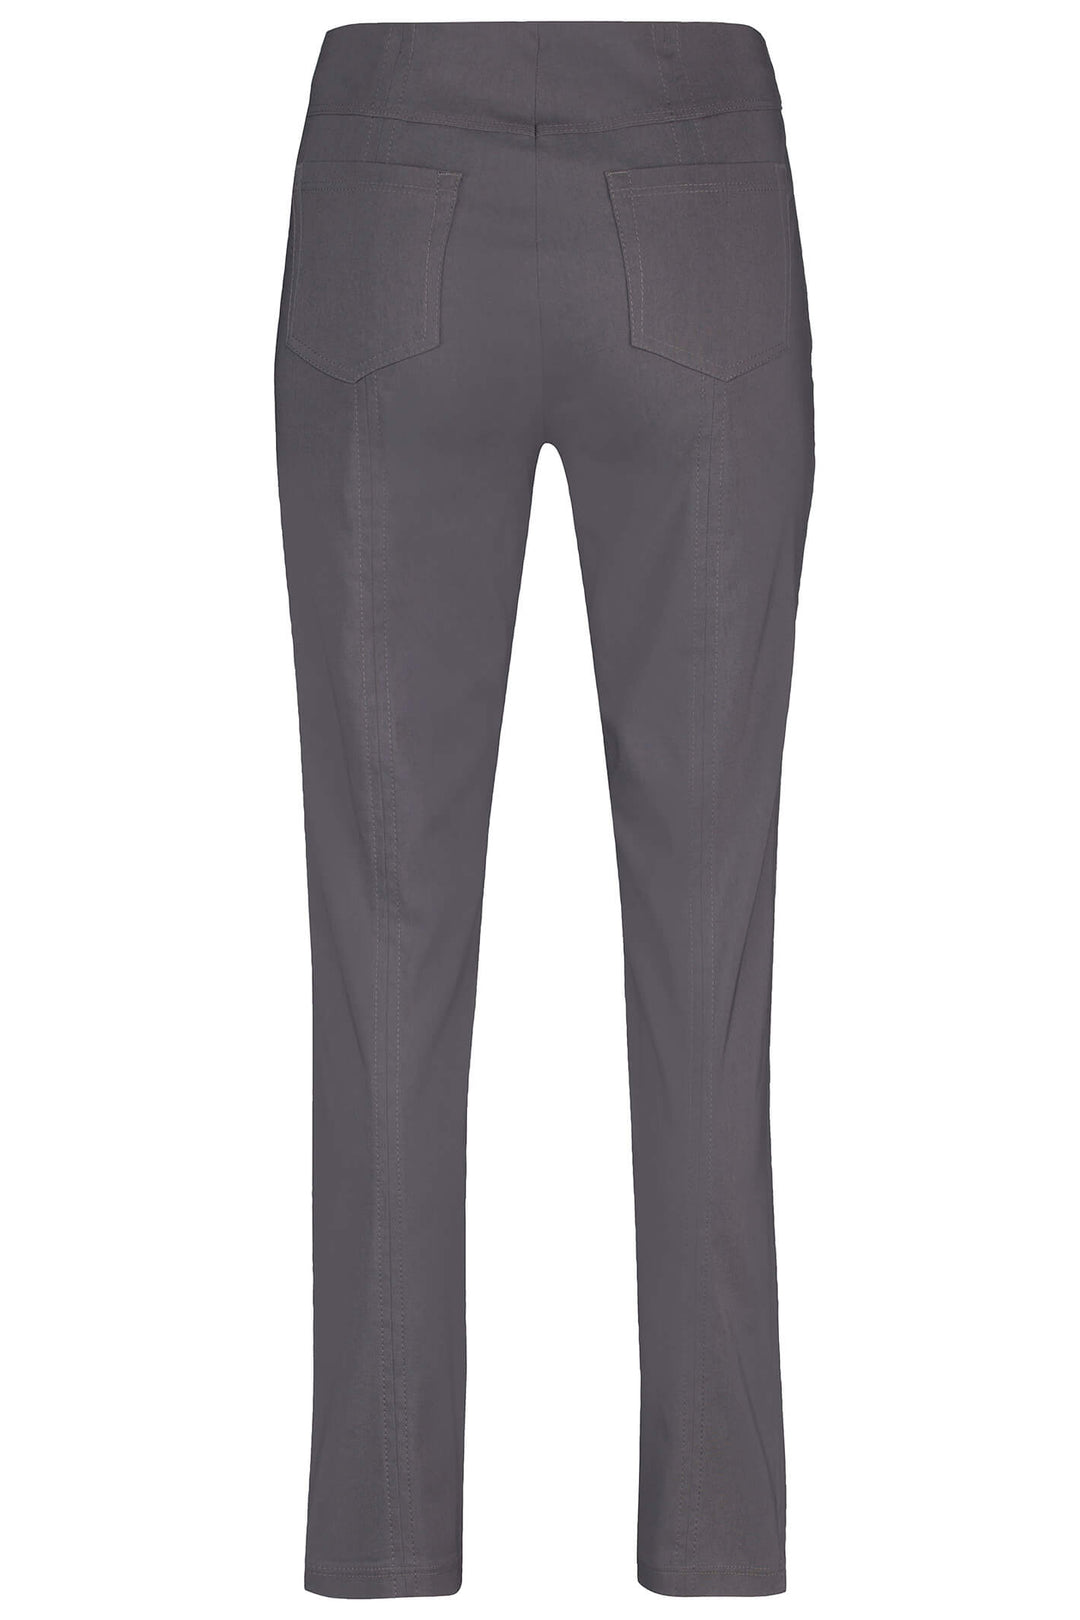 Robell 51559-5499-97 Bella K Charcoal Grey Petite Trousers (Short 73cm) - Dotique